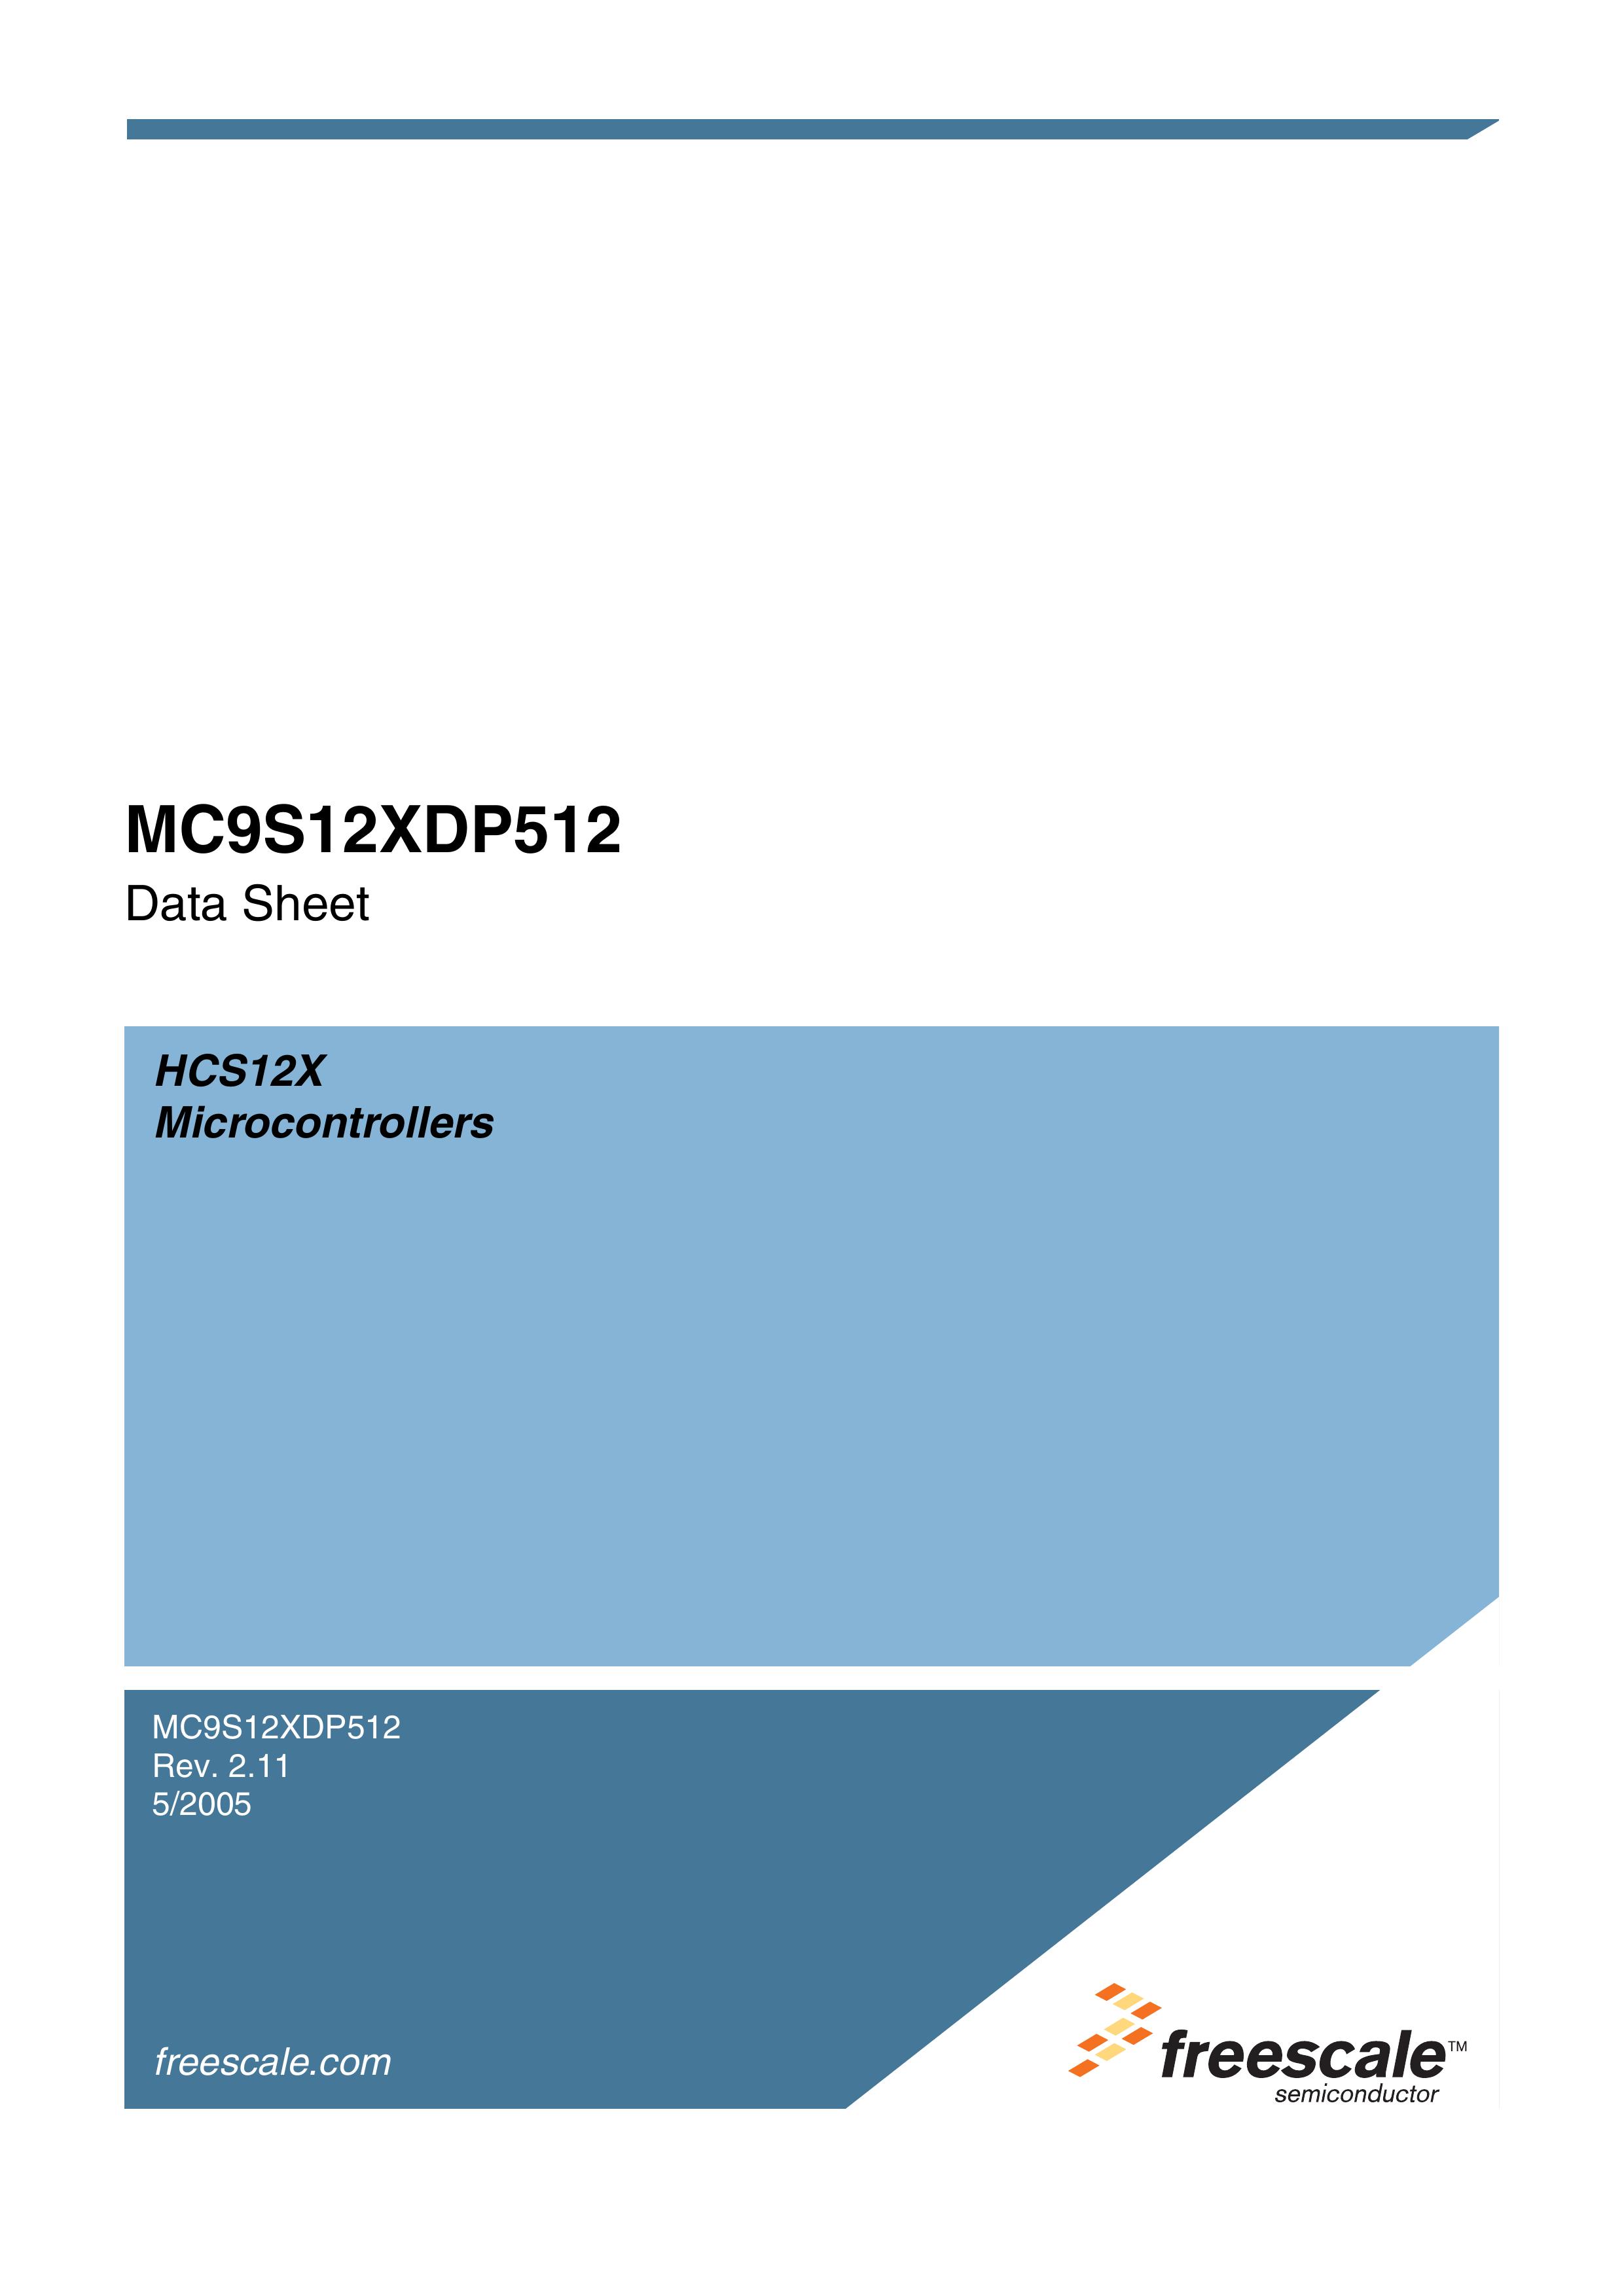 Freescale Semiconductor MC9S12XDP512 Microscope & Magnifier User Manual